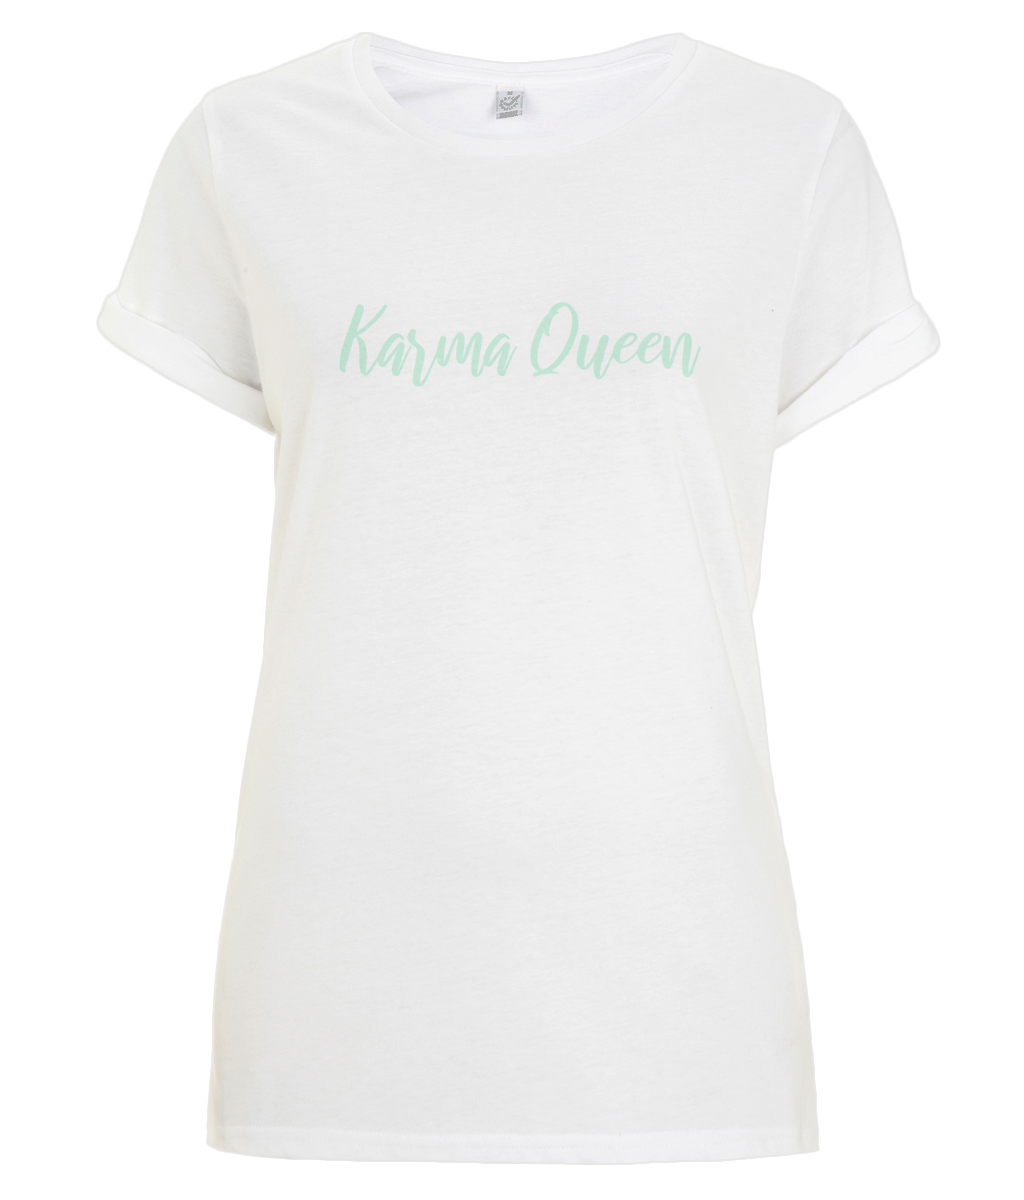 Karma Queen - organic T-shirt - Mint.